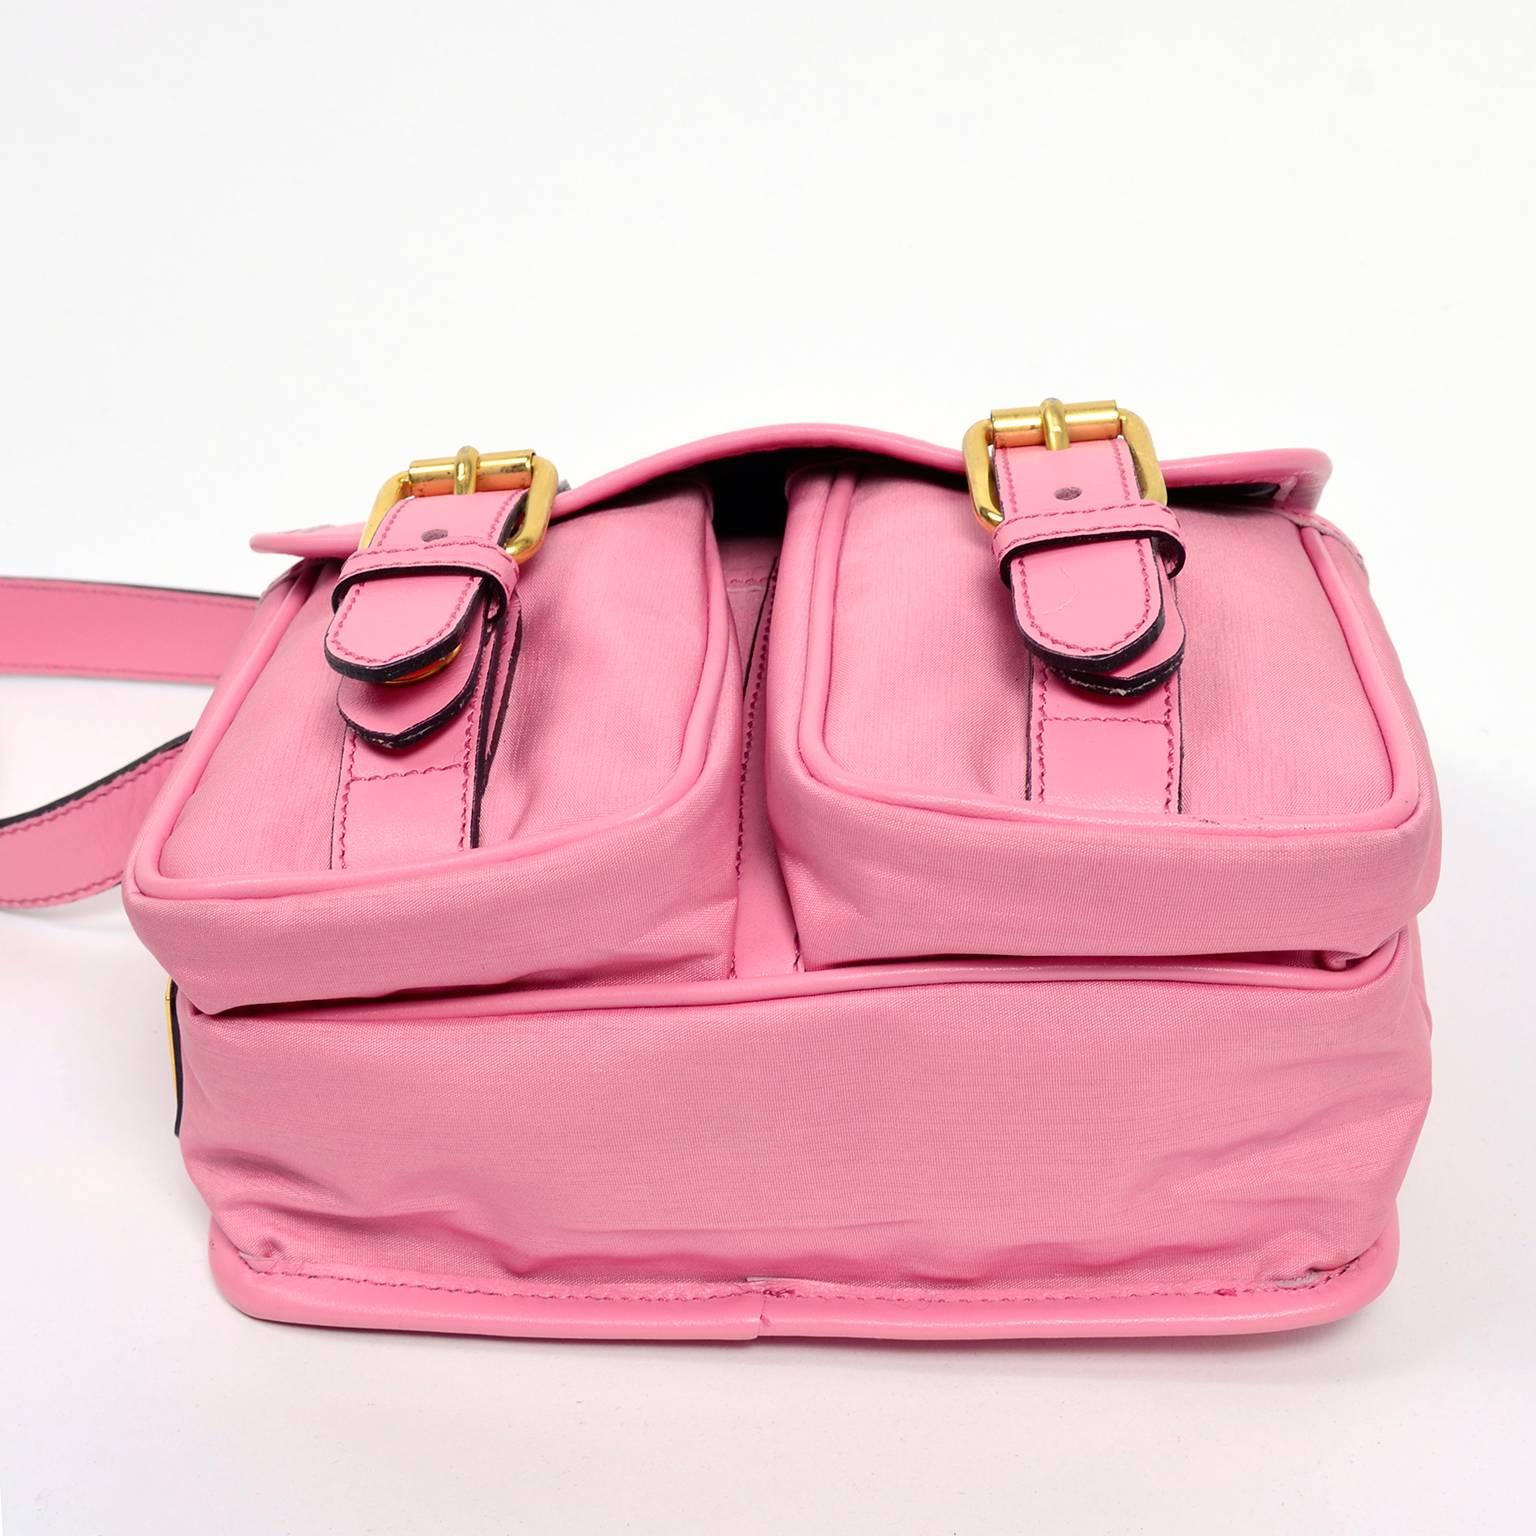 pink moschino bag